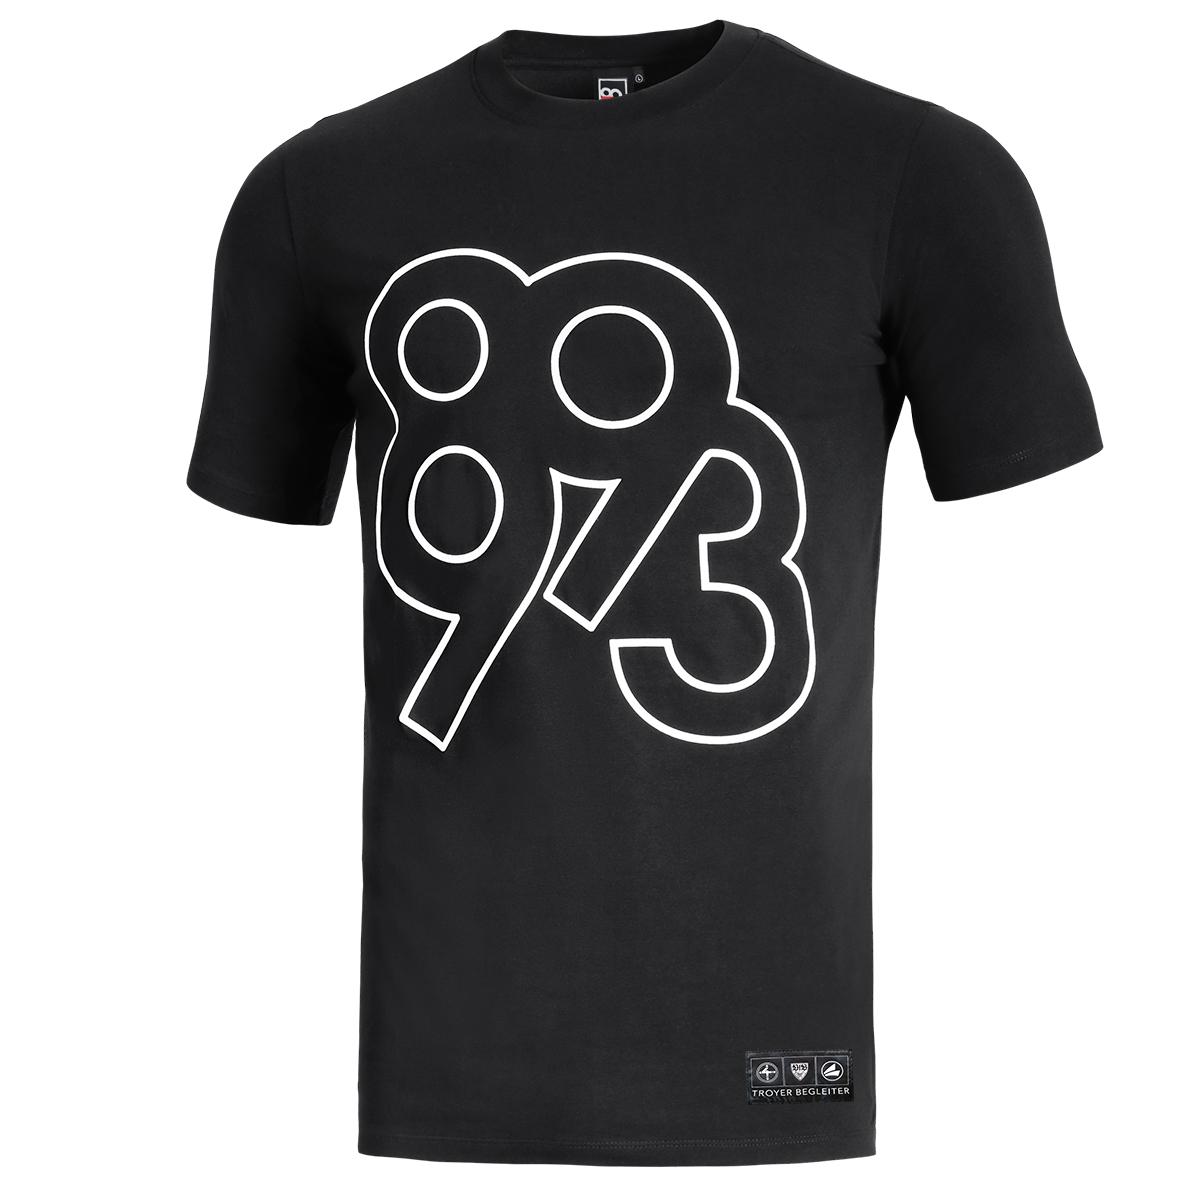 VfB T-shirt 8993 mit Logo groß